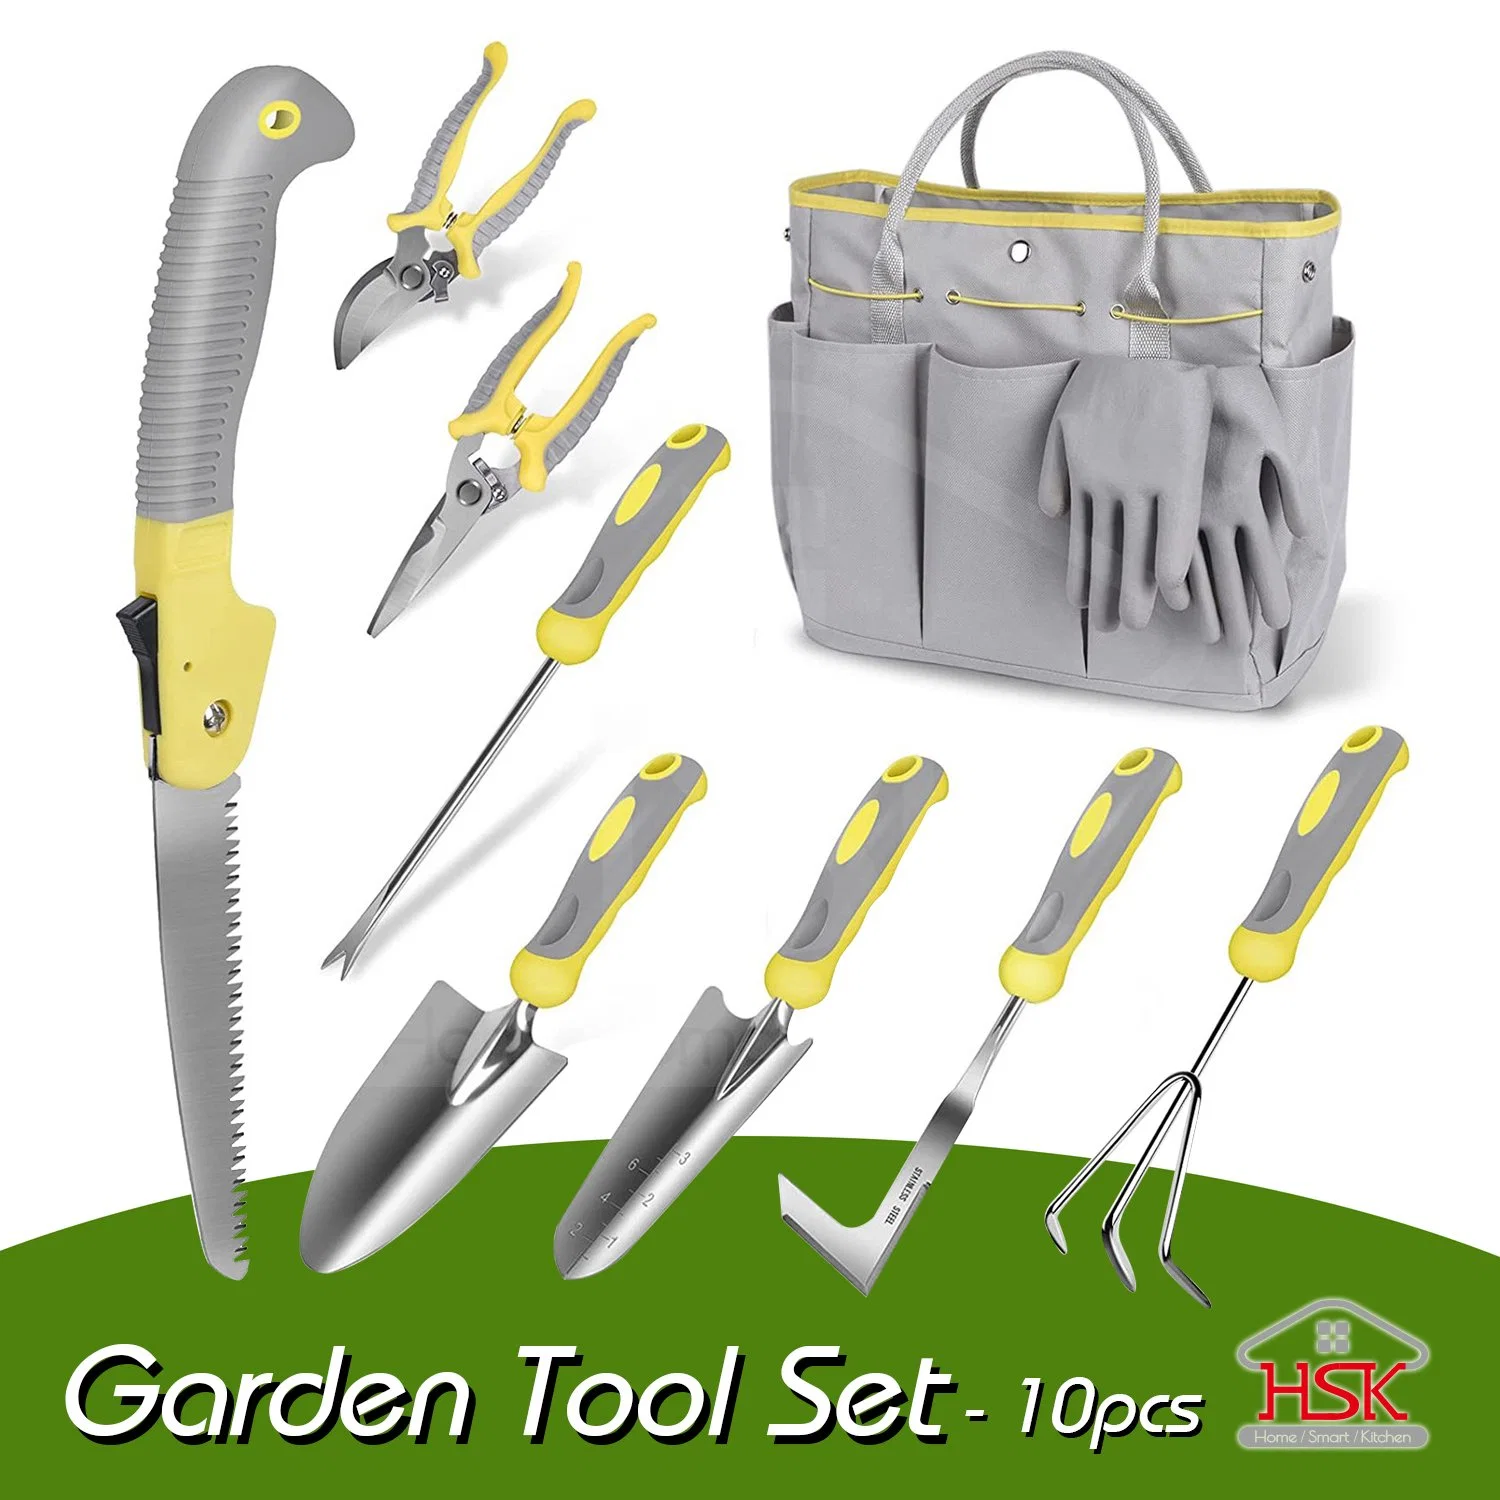 Garden Tools Set 10 Piece with Garden Tote Bag